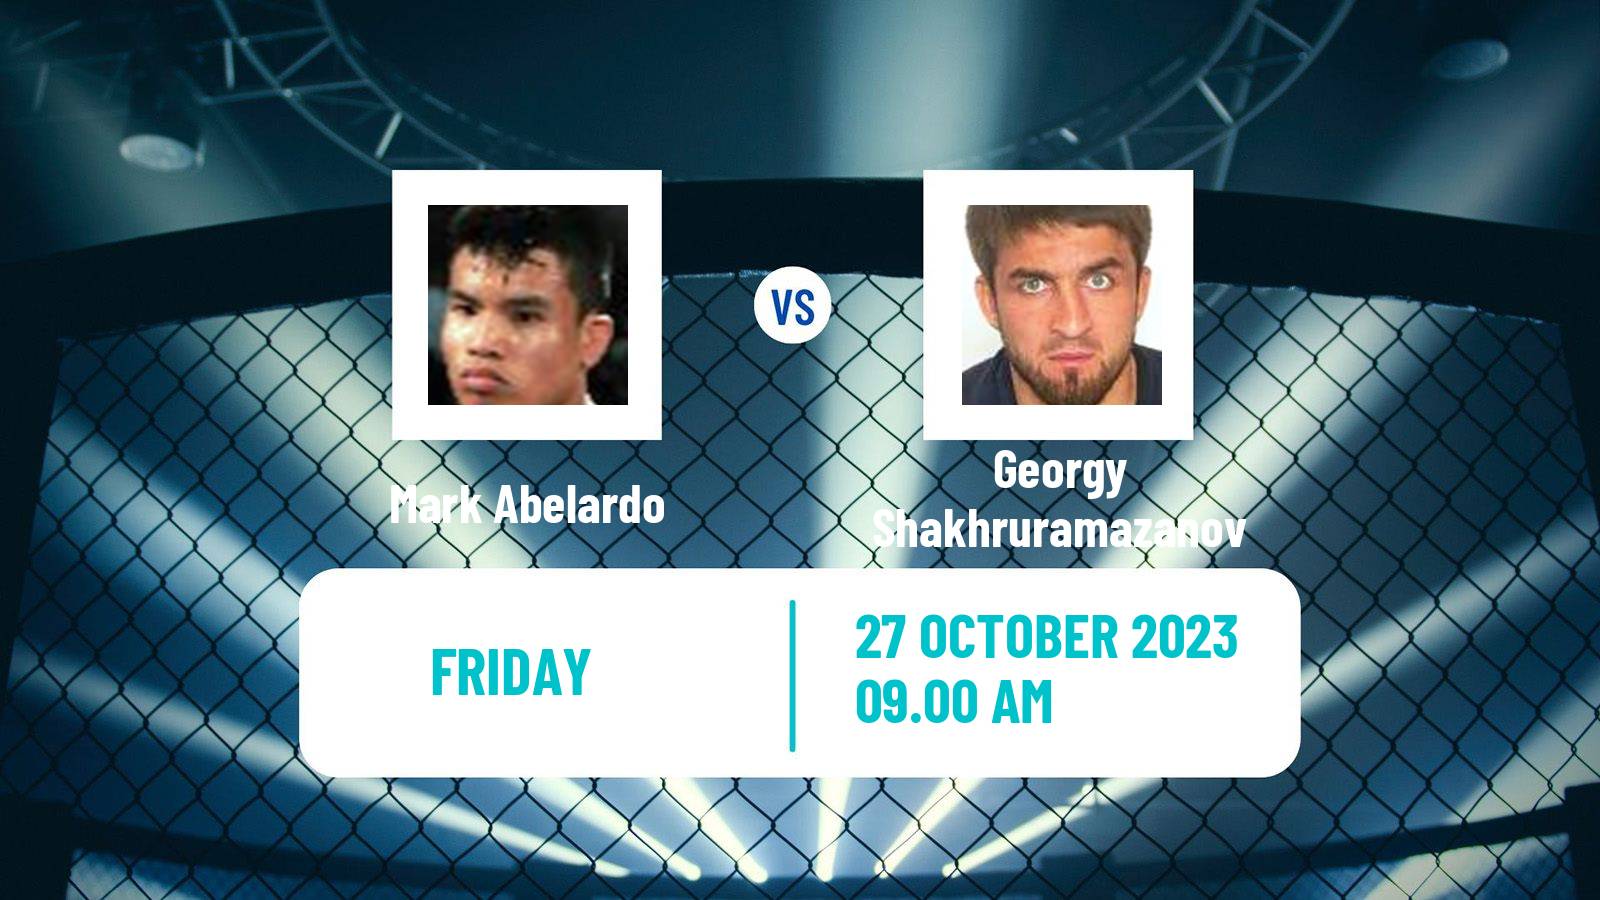 MMA Bantamweight One Championship Men Mark Abelardo - Georgy Shakhruramazanov